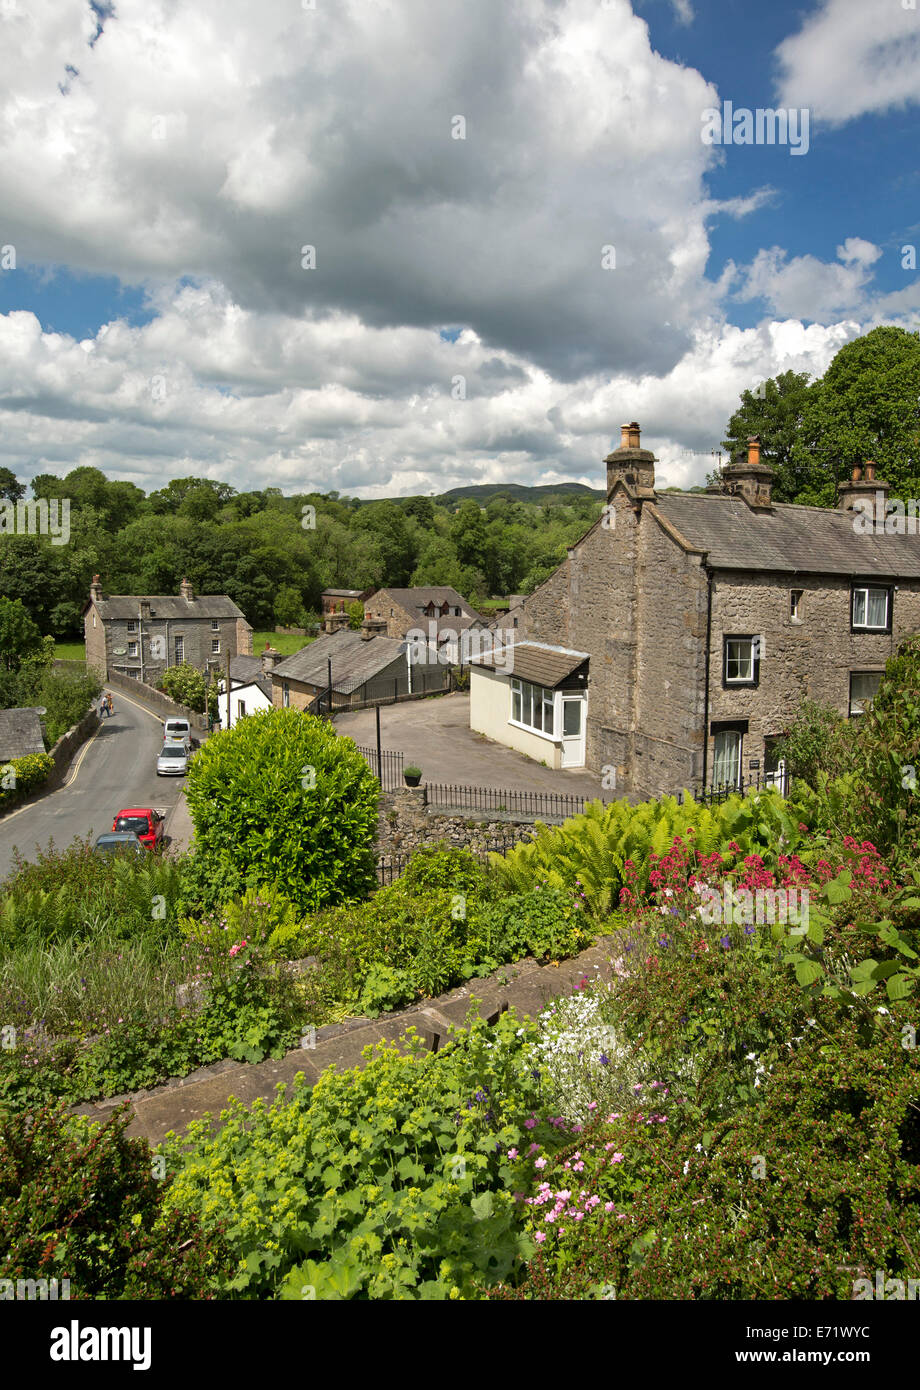 Lush gardens surrounding stone houses in old village of Ingleton in Yorkshire Dales region, England Stock Photo